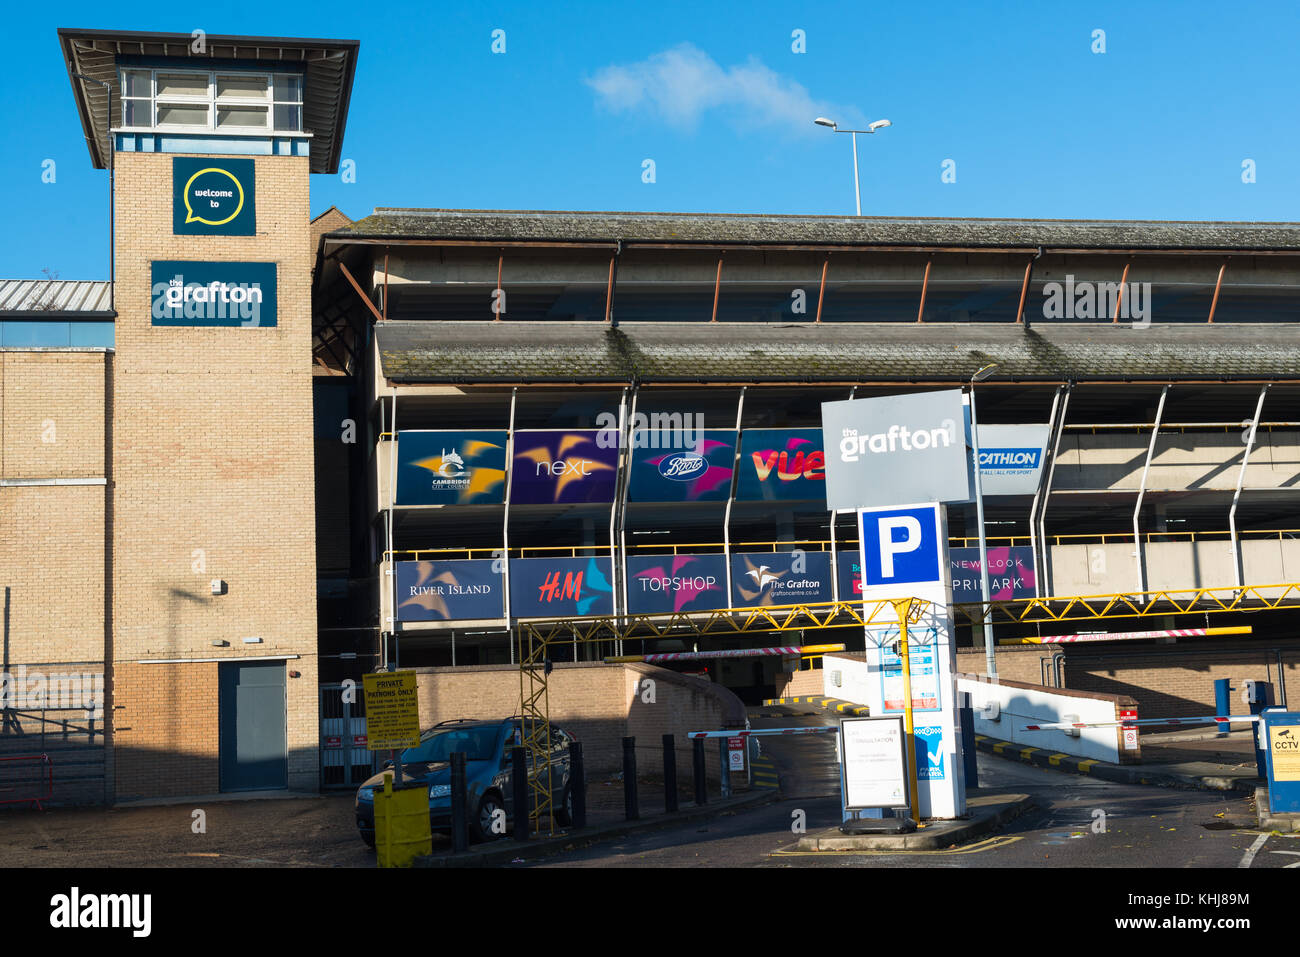 Multistory car park for the Grafton shopping centre, Cambridge, England, UK Stock Photo